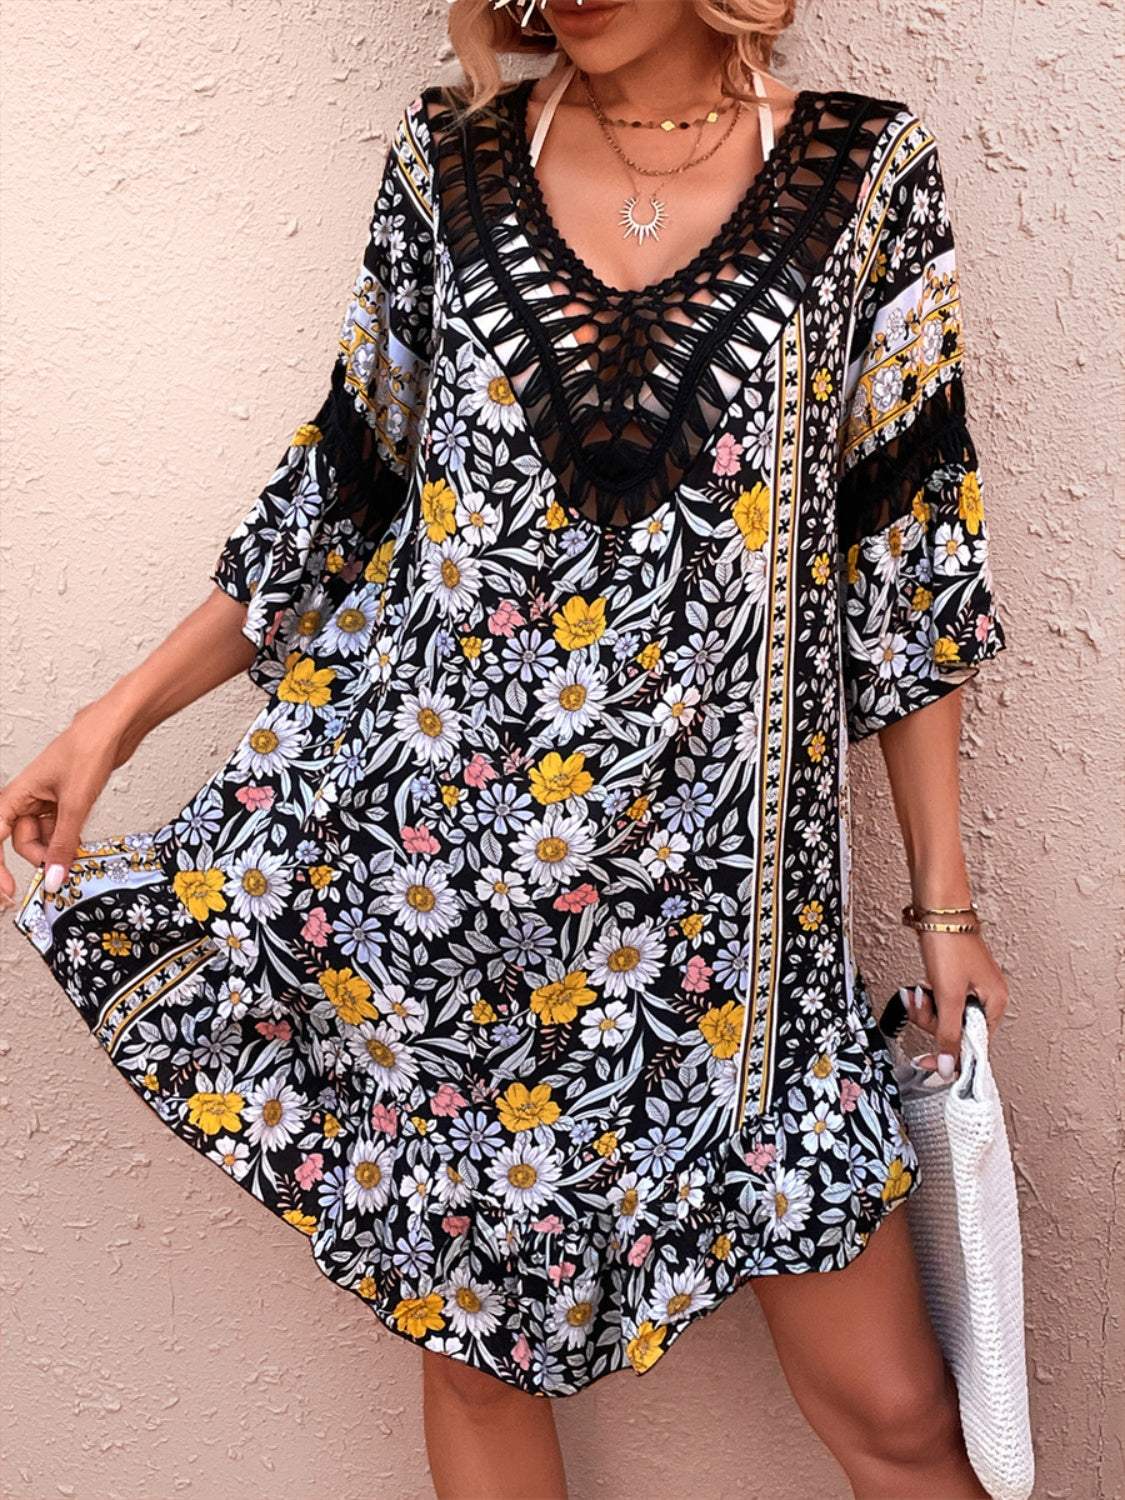 TEEK - Black Floral Backless Cutout Cover Up DRESS TEEK Trend   